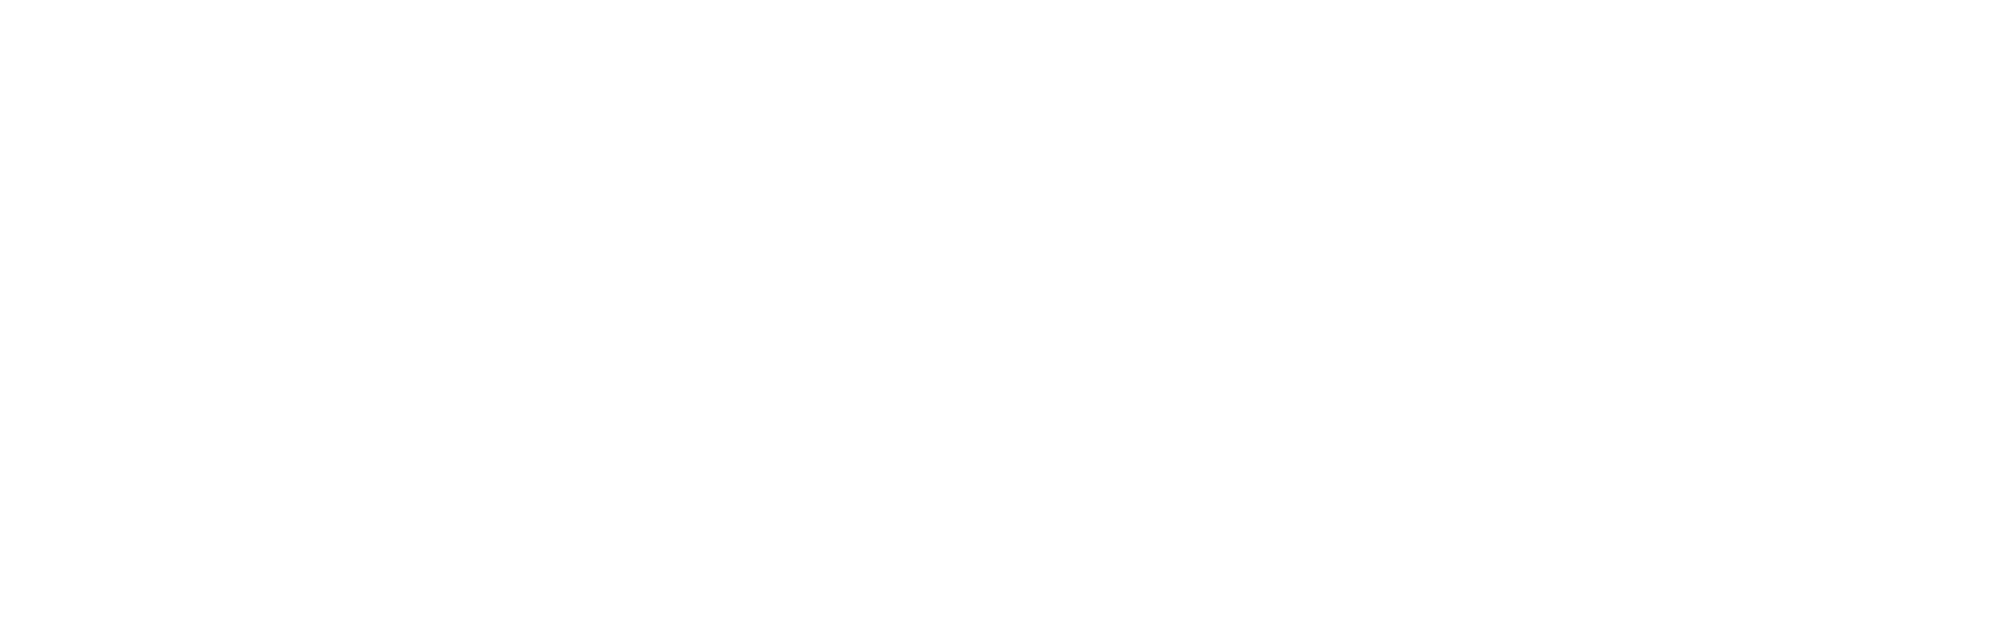 official blog